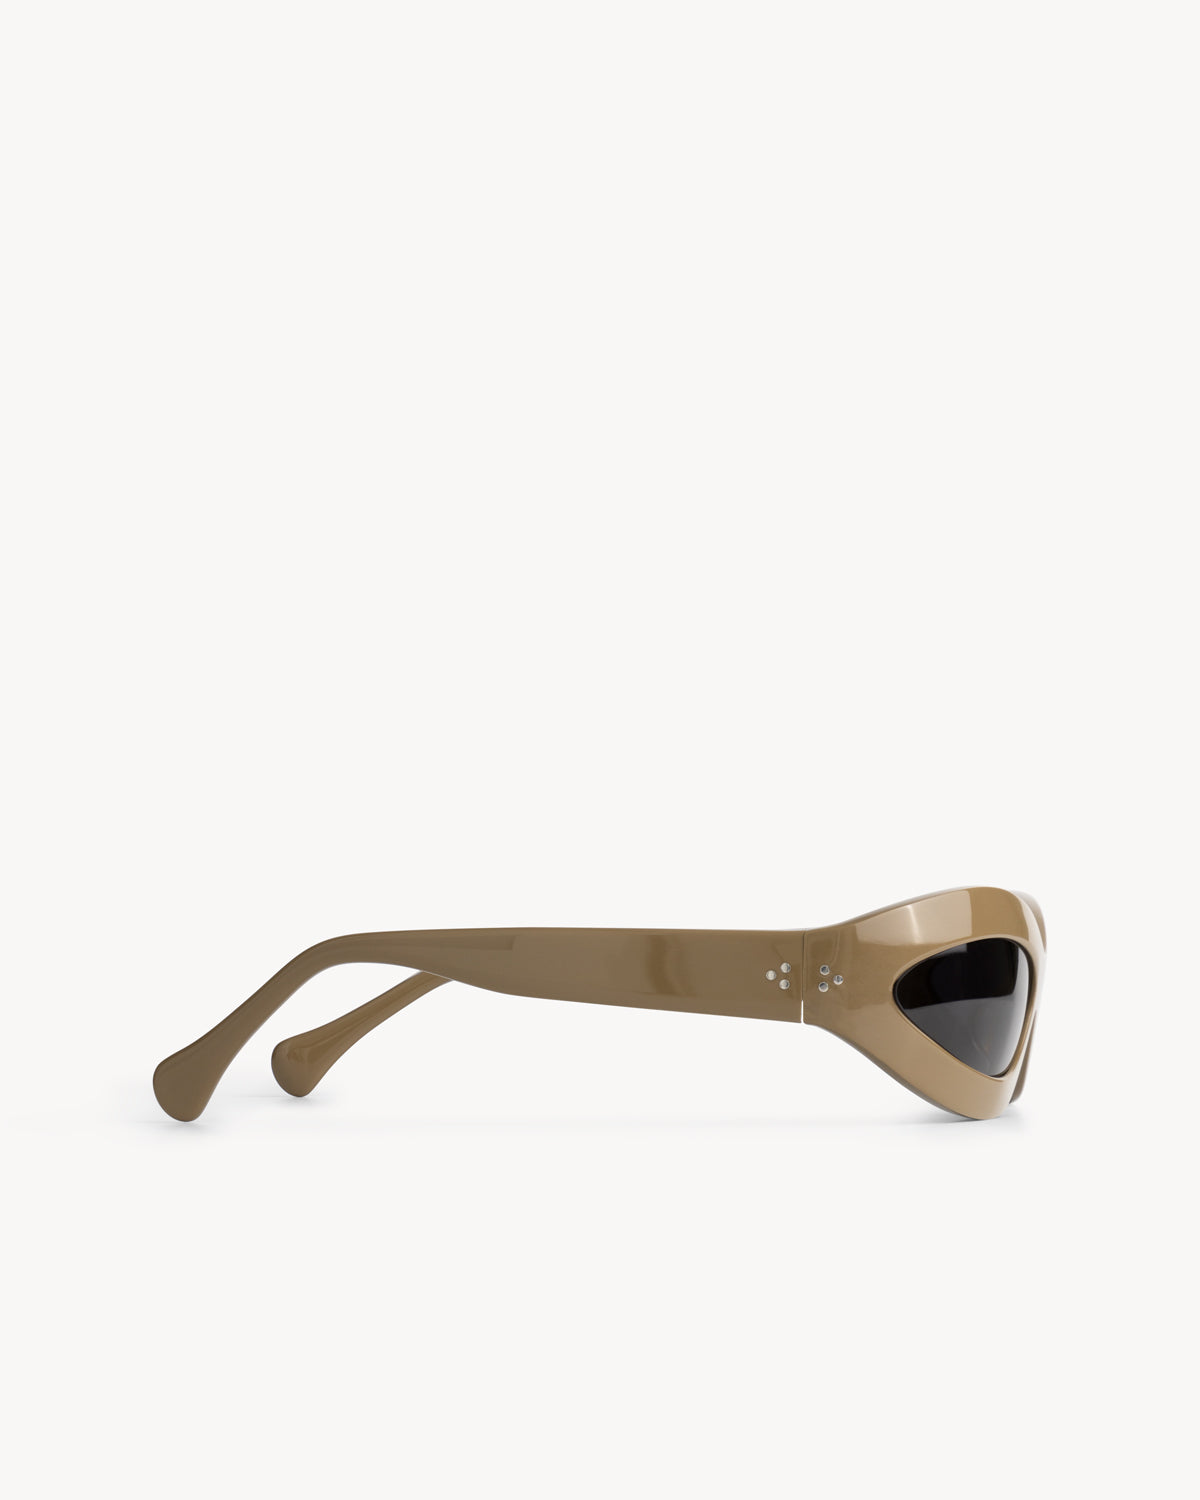 Port Tanger Summa Sunglasses in Zaytun Acetate and Black Lenses 4